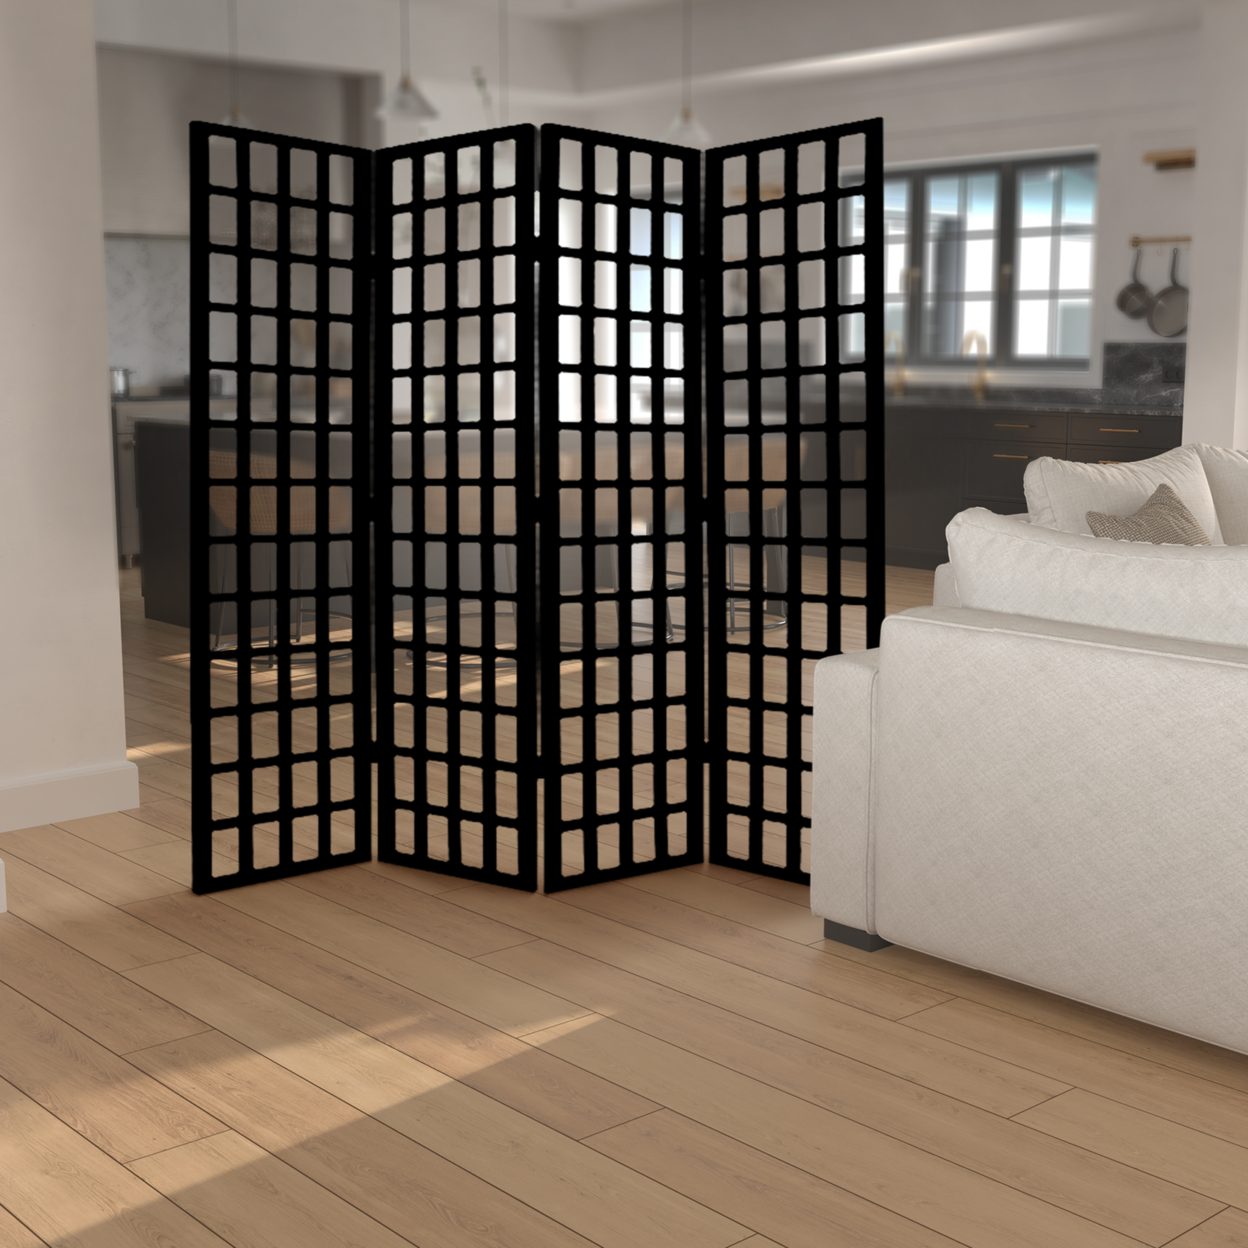 Wooden 4 Panel Foldable Window Pane Screen With Grid Design, Black- Saltoro Sherpi